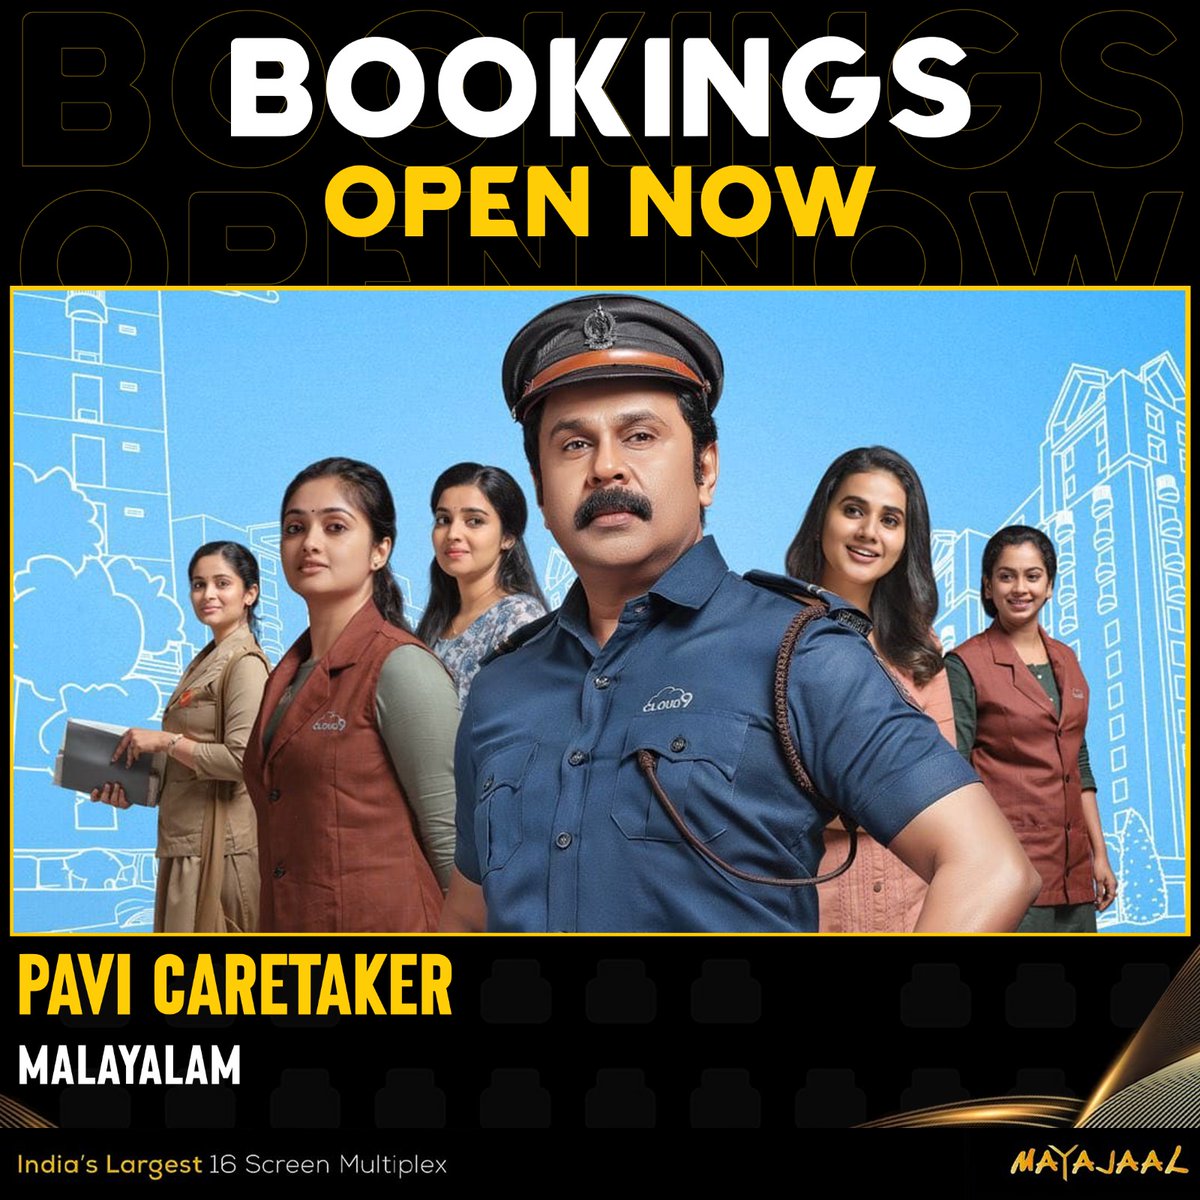 #PaviCareTaker  is here to bring a burst of laughter to the big screen! 😆

Bookings open for #PaviCareTaker  (Malayalam) at #Mayajaal 

🎟️bit.ly/3sVdbqD

#Dileep #vineethkumar #anooppadmanaban #MidhunMukunthan